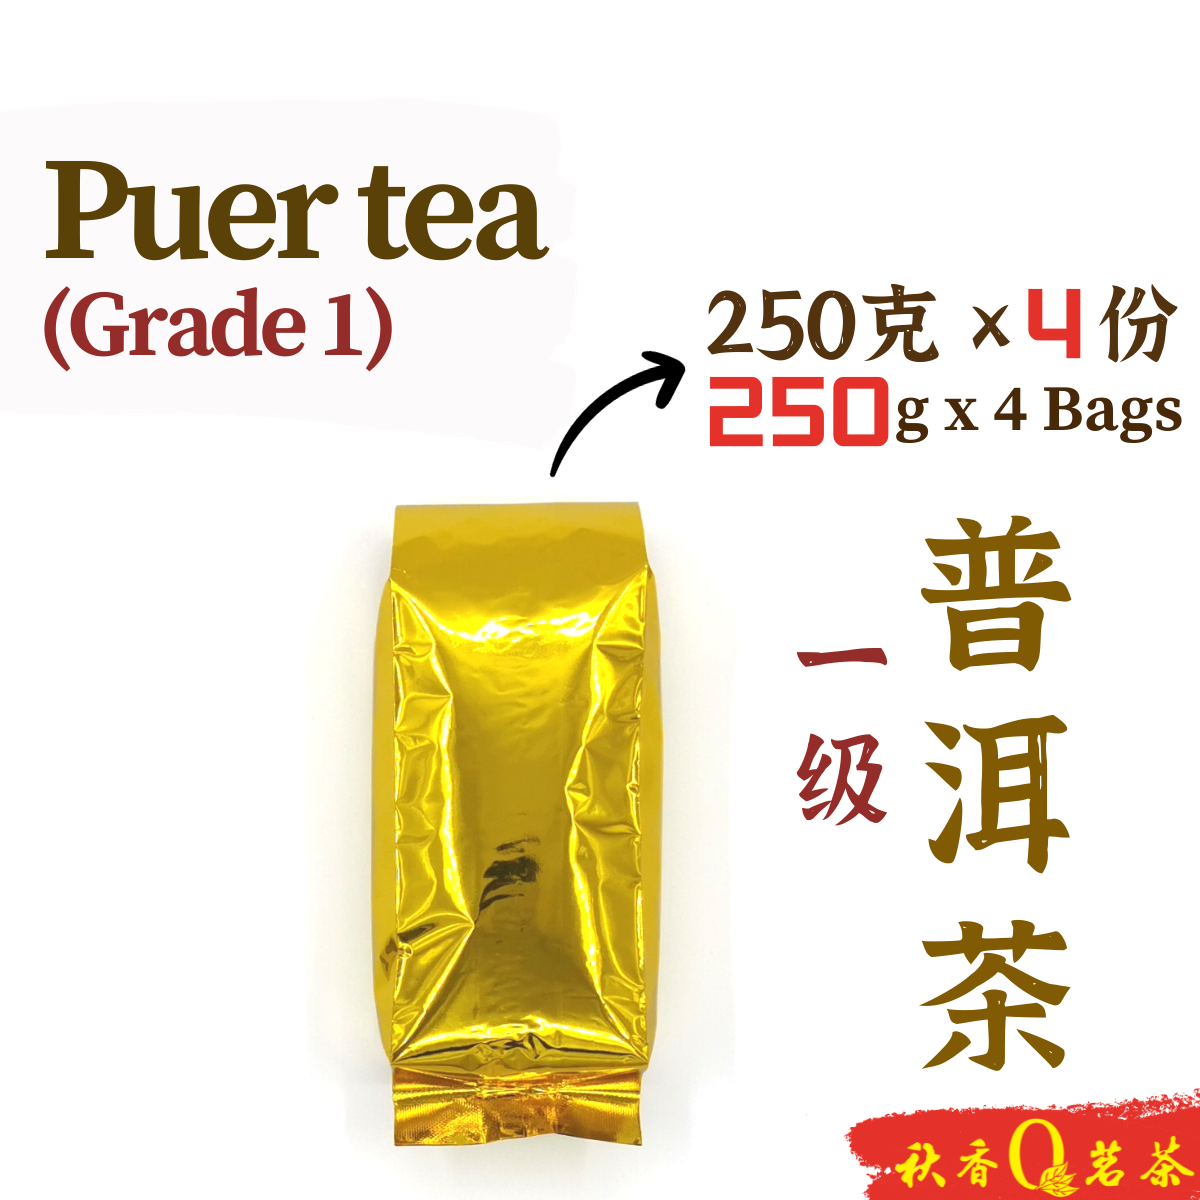 1级普洱茶 Puer Tea (Grade 1)【250g x 4 bags】 |【普洱熟茶 Ripe Puer tea】